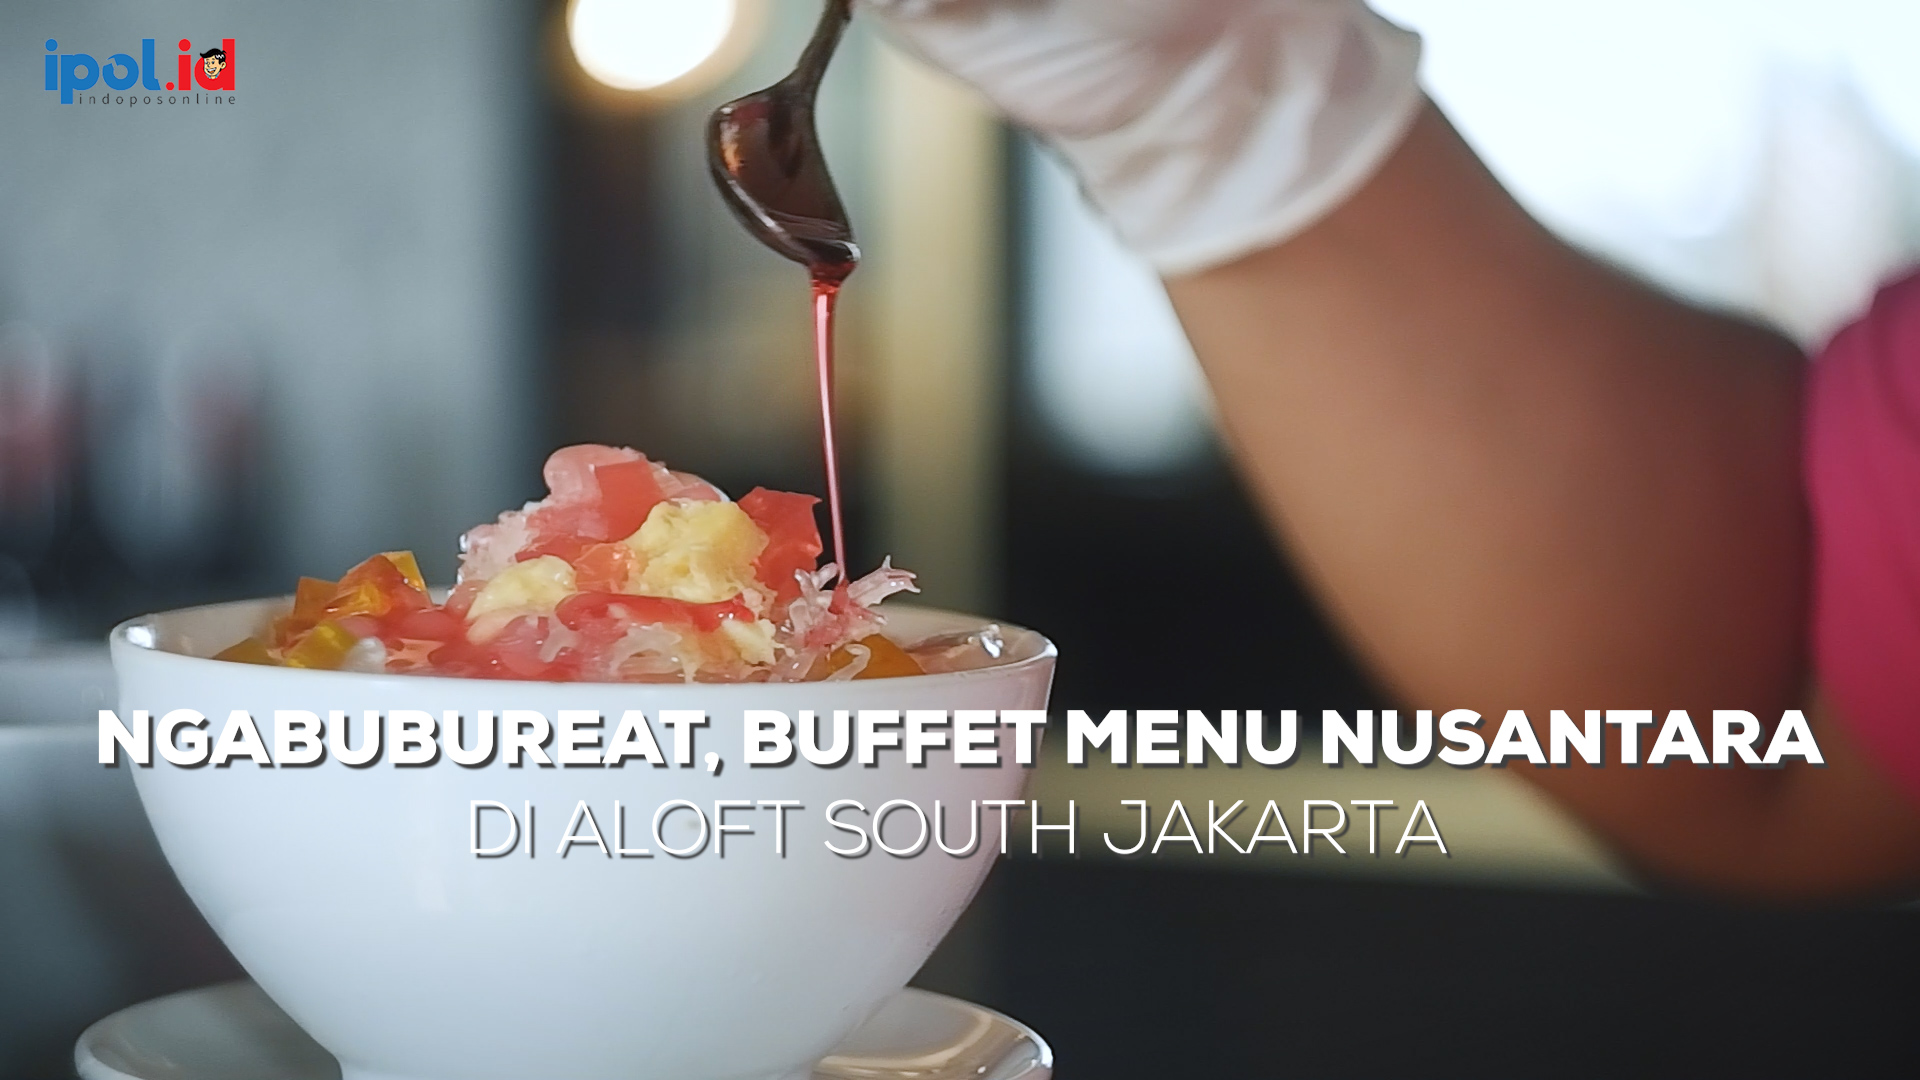 NgabuburEAT, Buffet Menu Nusantara di Aloft South Jakarta.